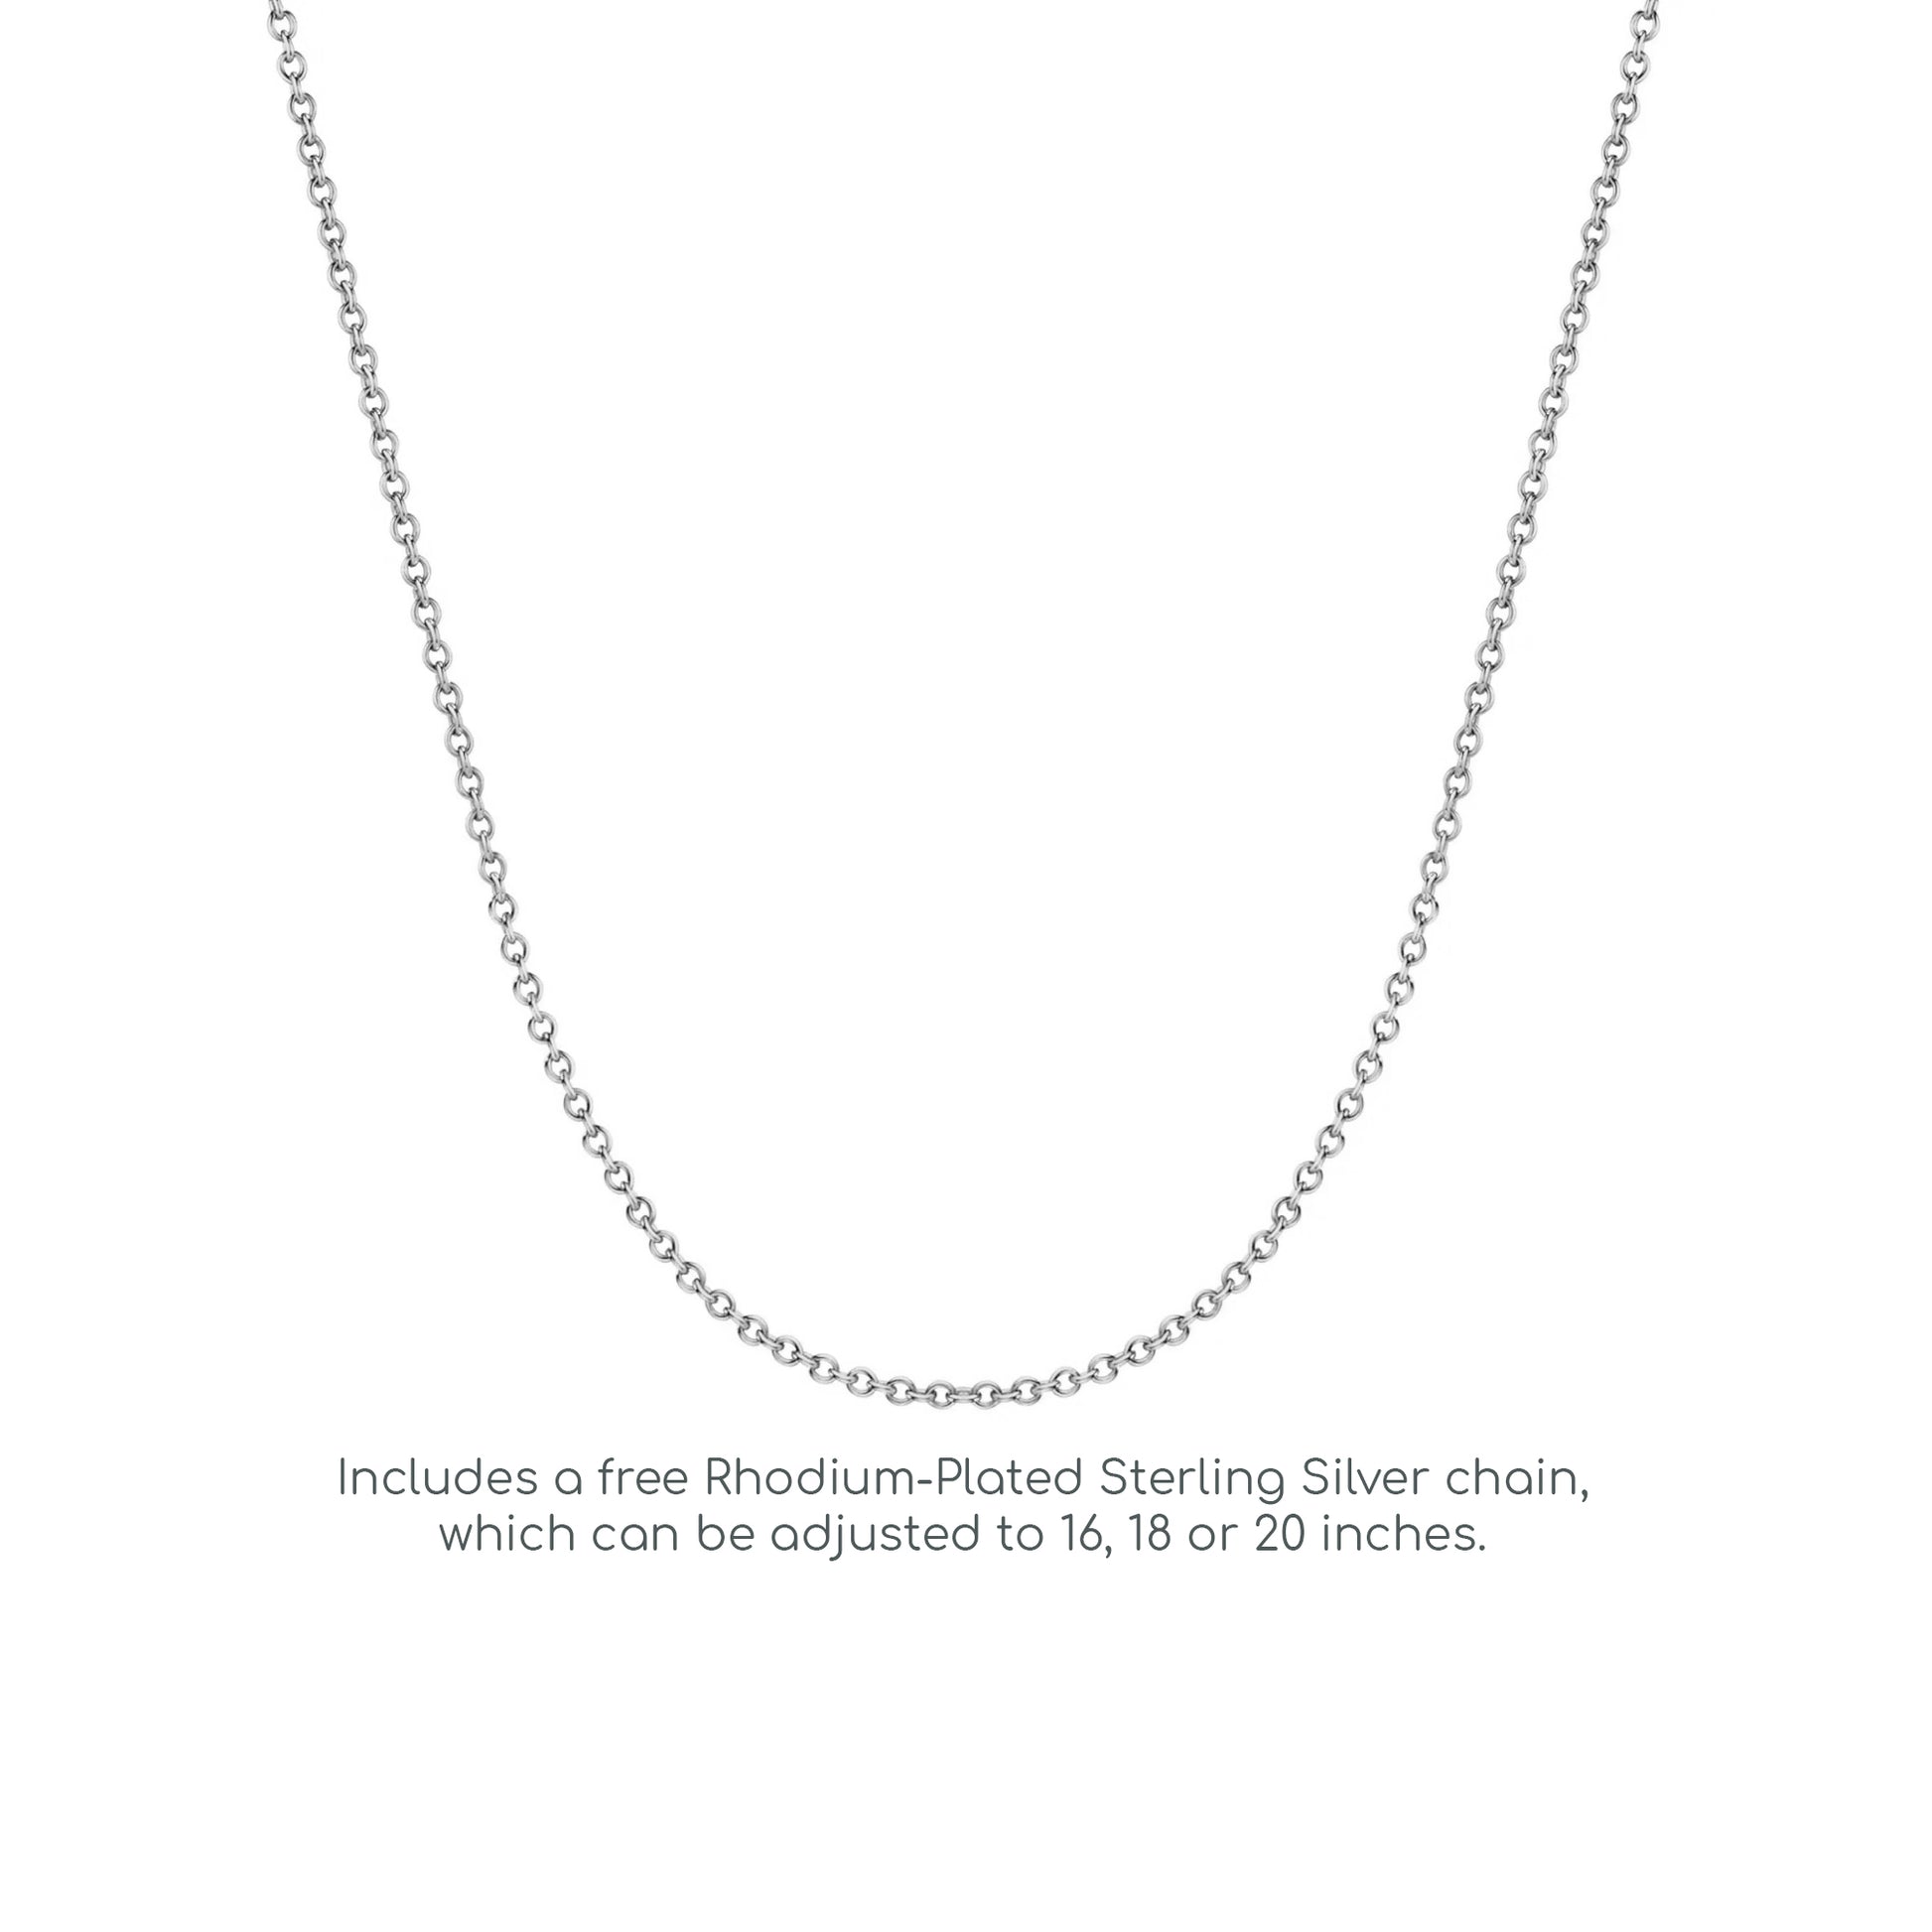 Silver  Pear CZ Tears of Joy Charm Necklace 18 inch - GVP141